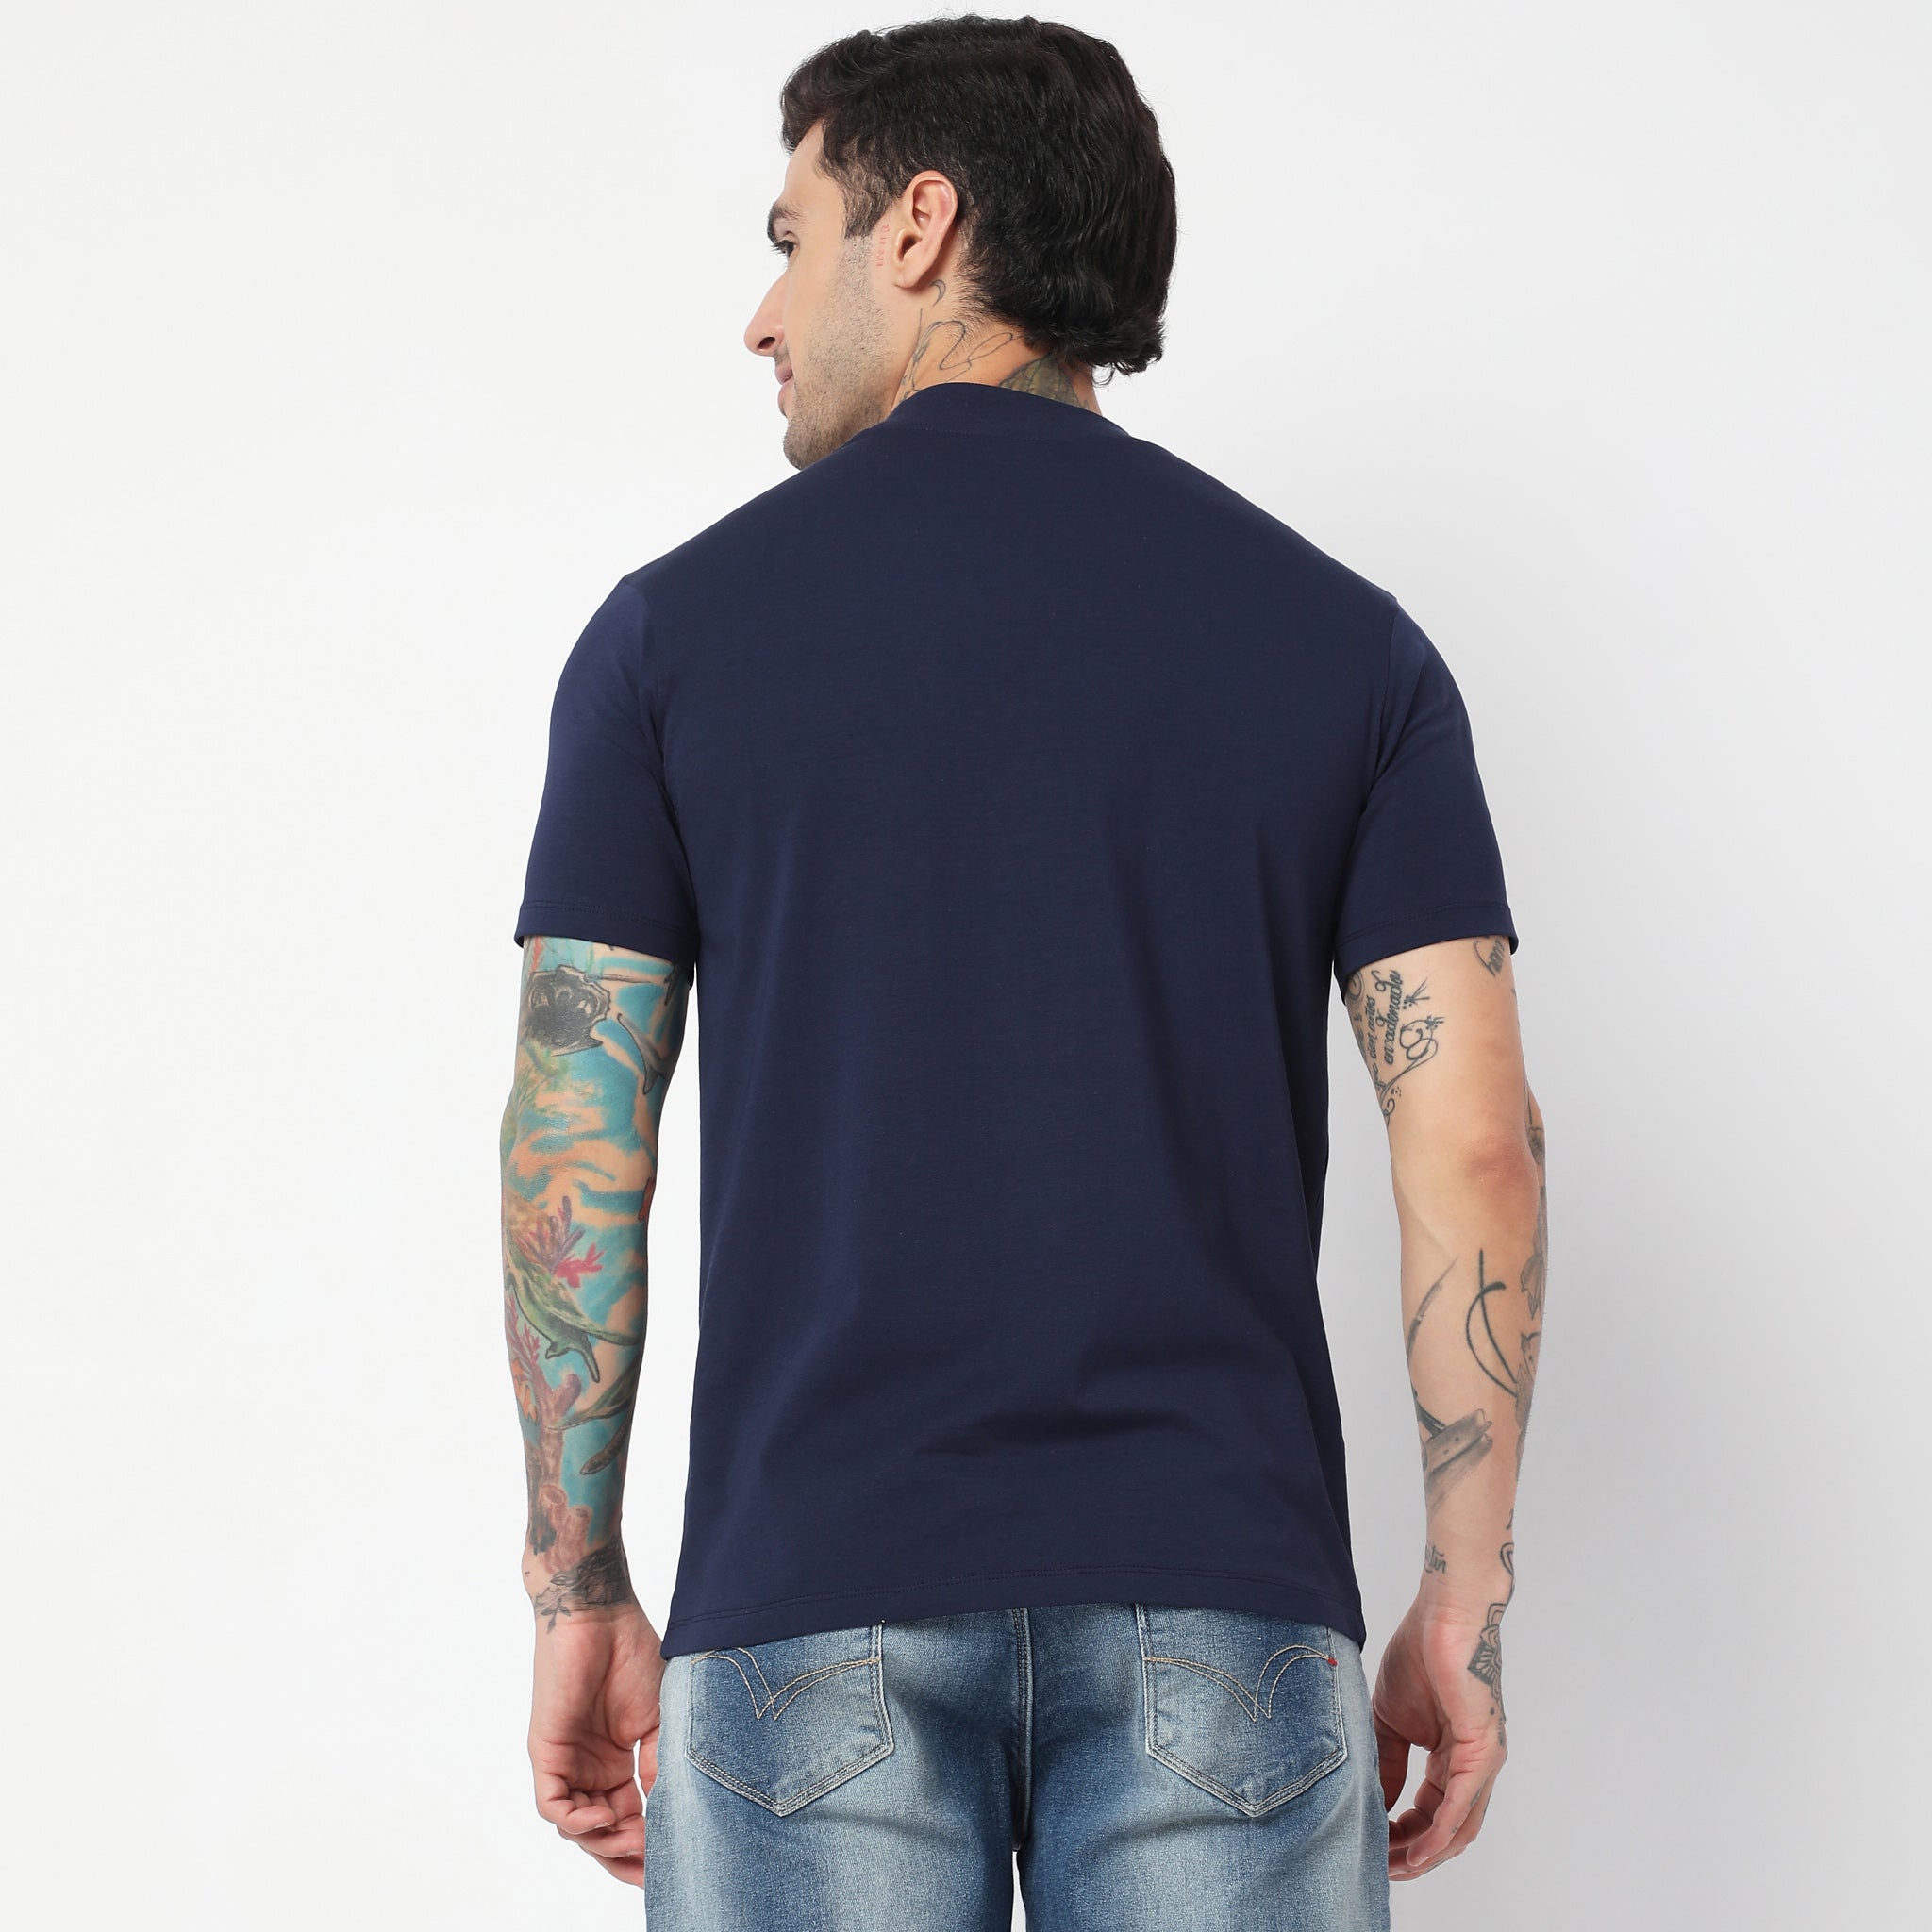 Slim Fit Solid T-Shirt